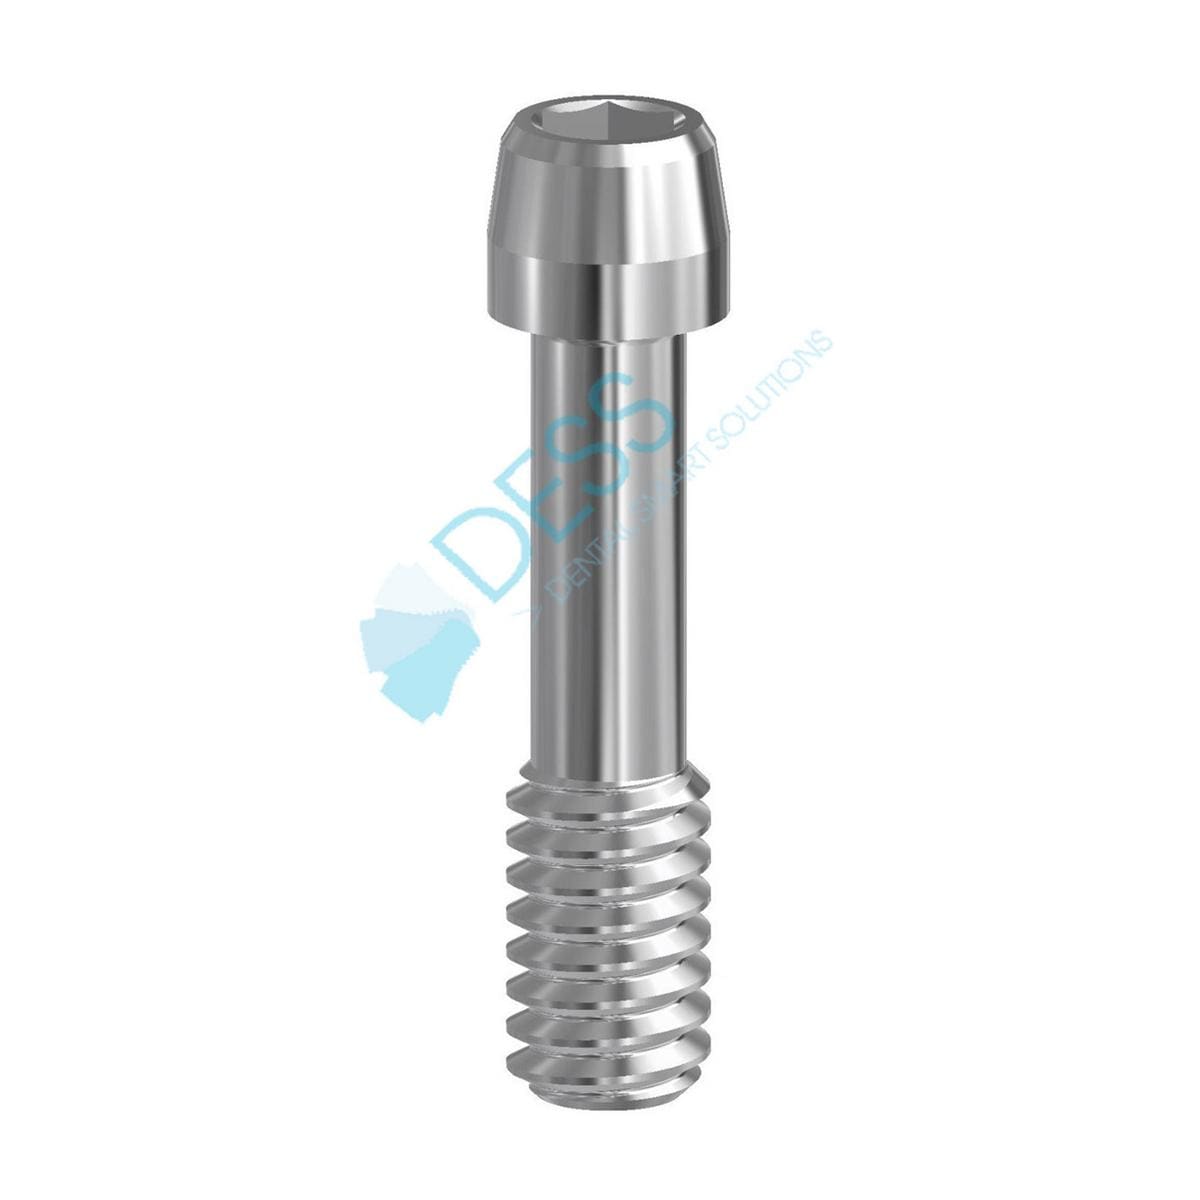 Abutmentschraube auf Implantat - kompatibel mit Astra Tech™ Osseospeed™ - Lilac (WP) Ø 4,5 mm - 5,0 mm, Packung 10 Stück